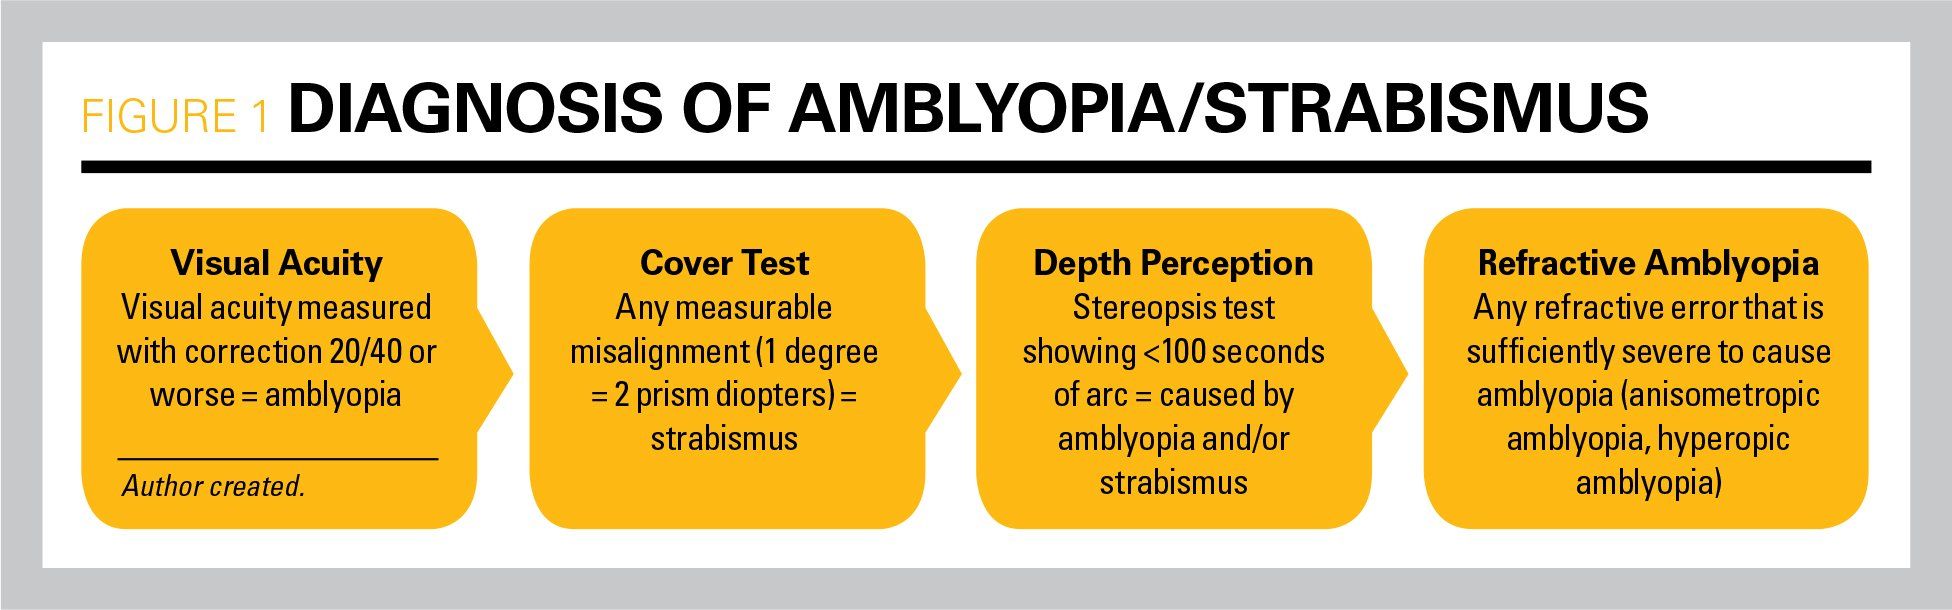 Diagnosis of amblyopia/strabismus